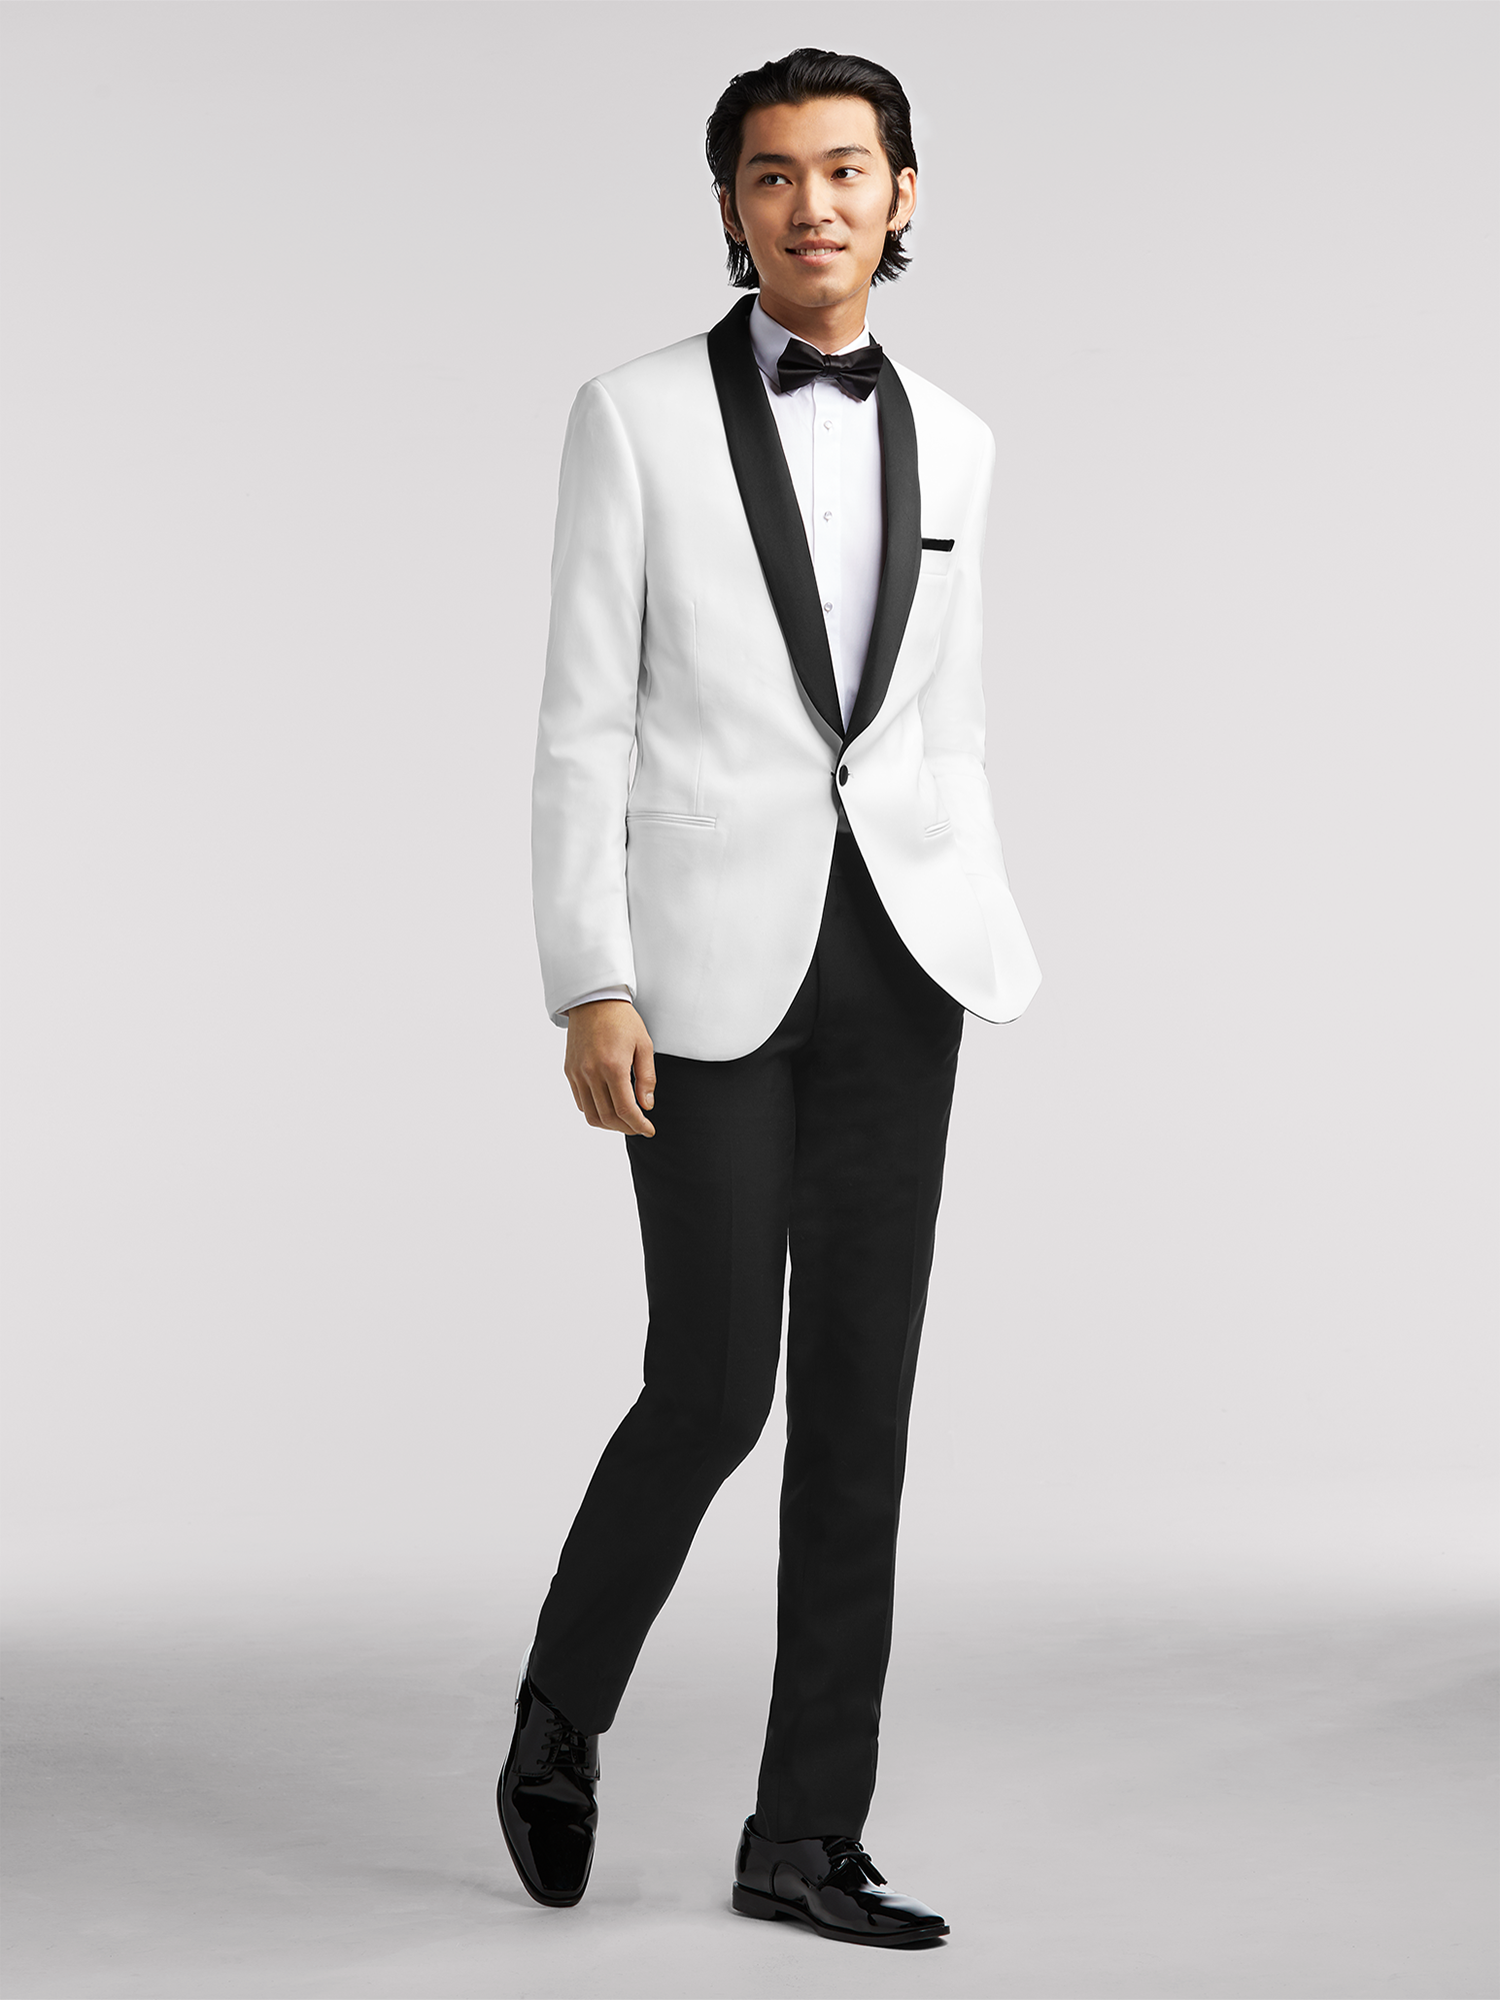 Calvin Klein White Dinner Jacket Tux | Moores Clothing